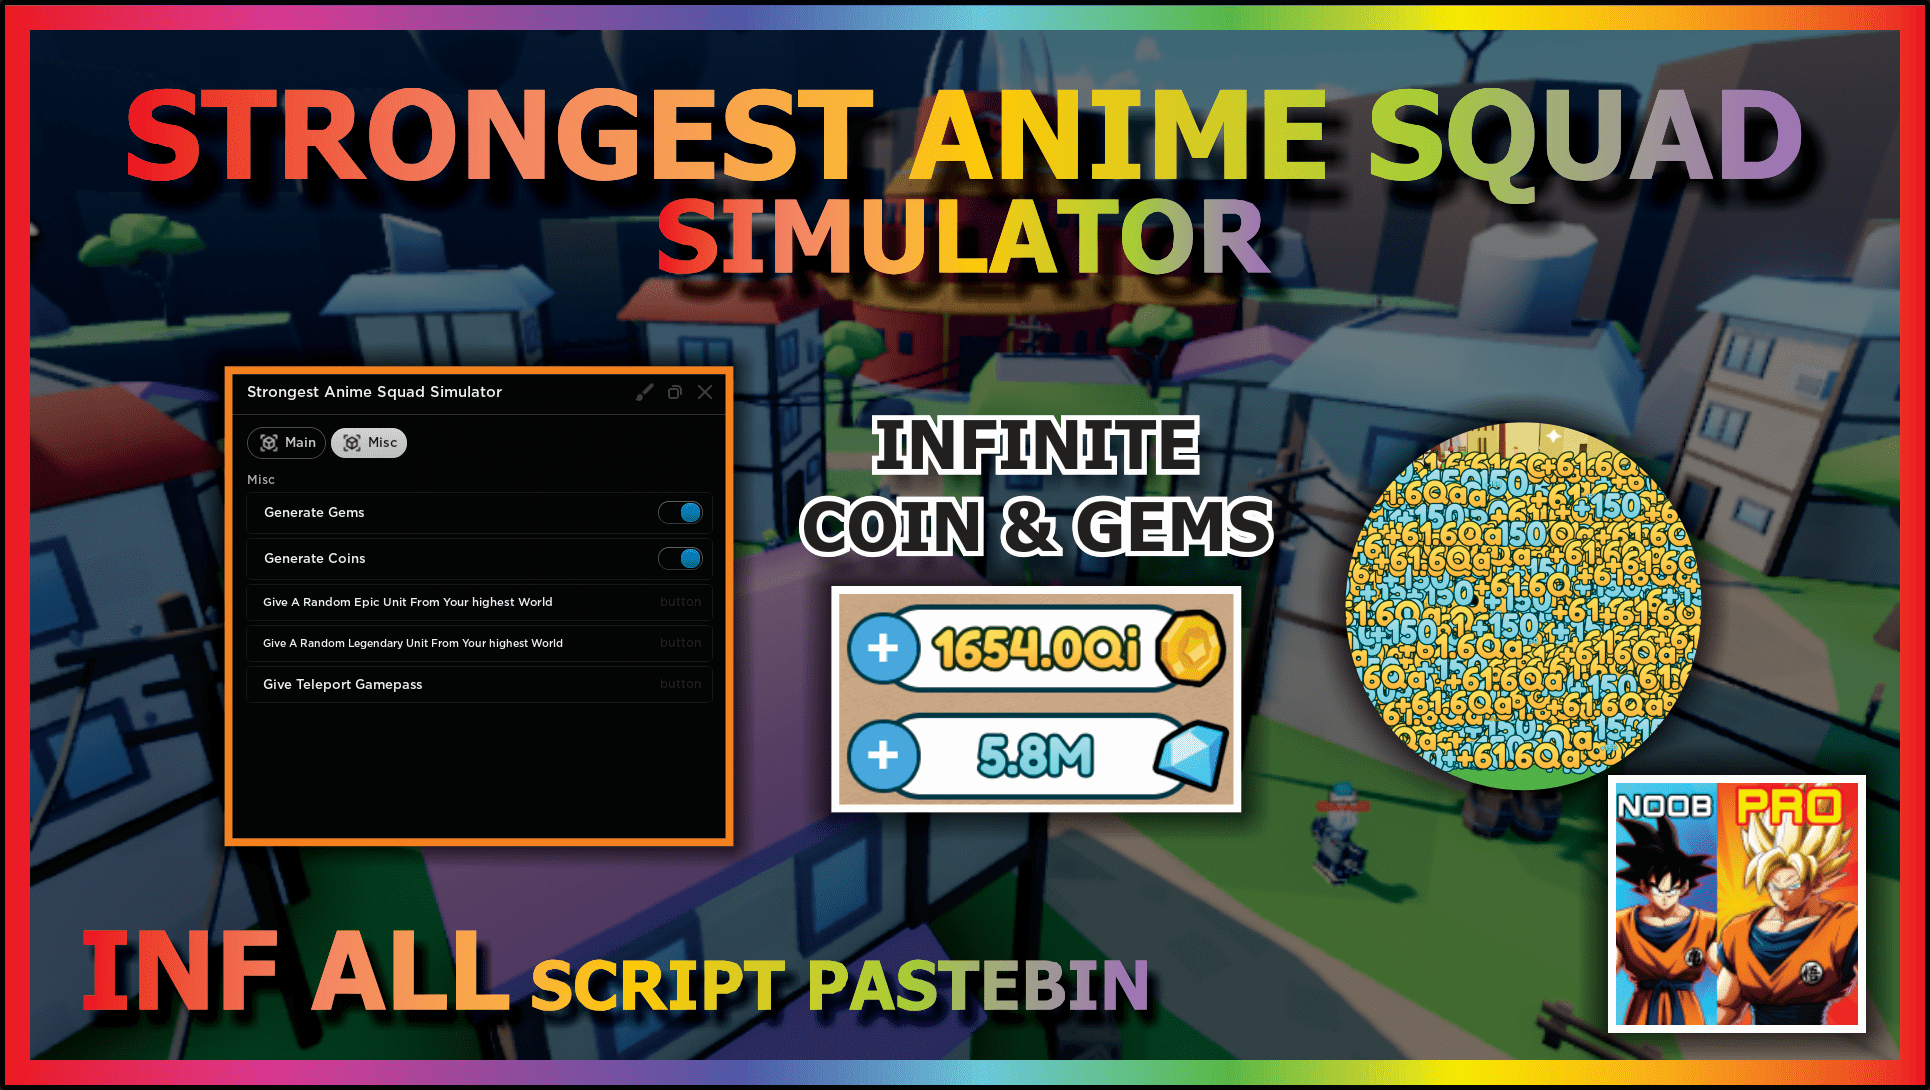 Strongest Anime Squad Simulator codes